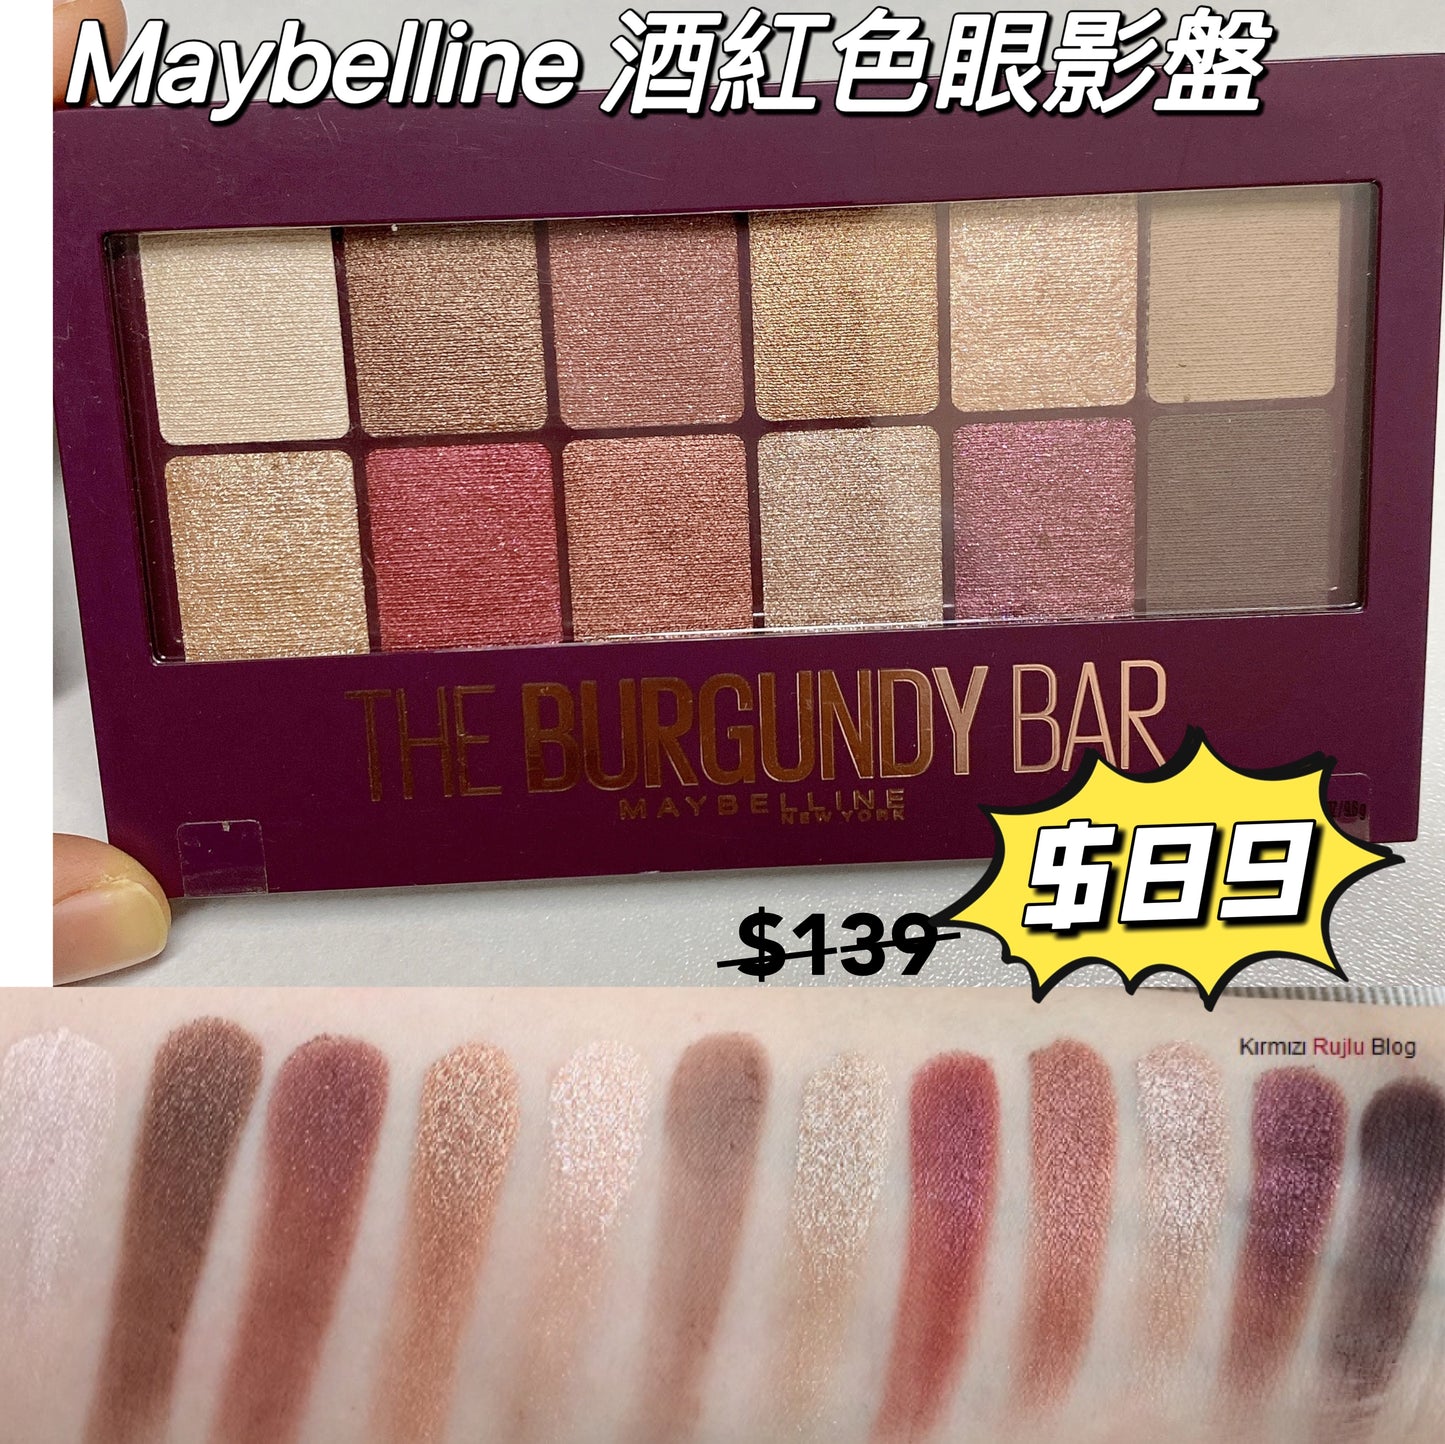 Maybelline the burgundy bar eyeshadow palette